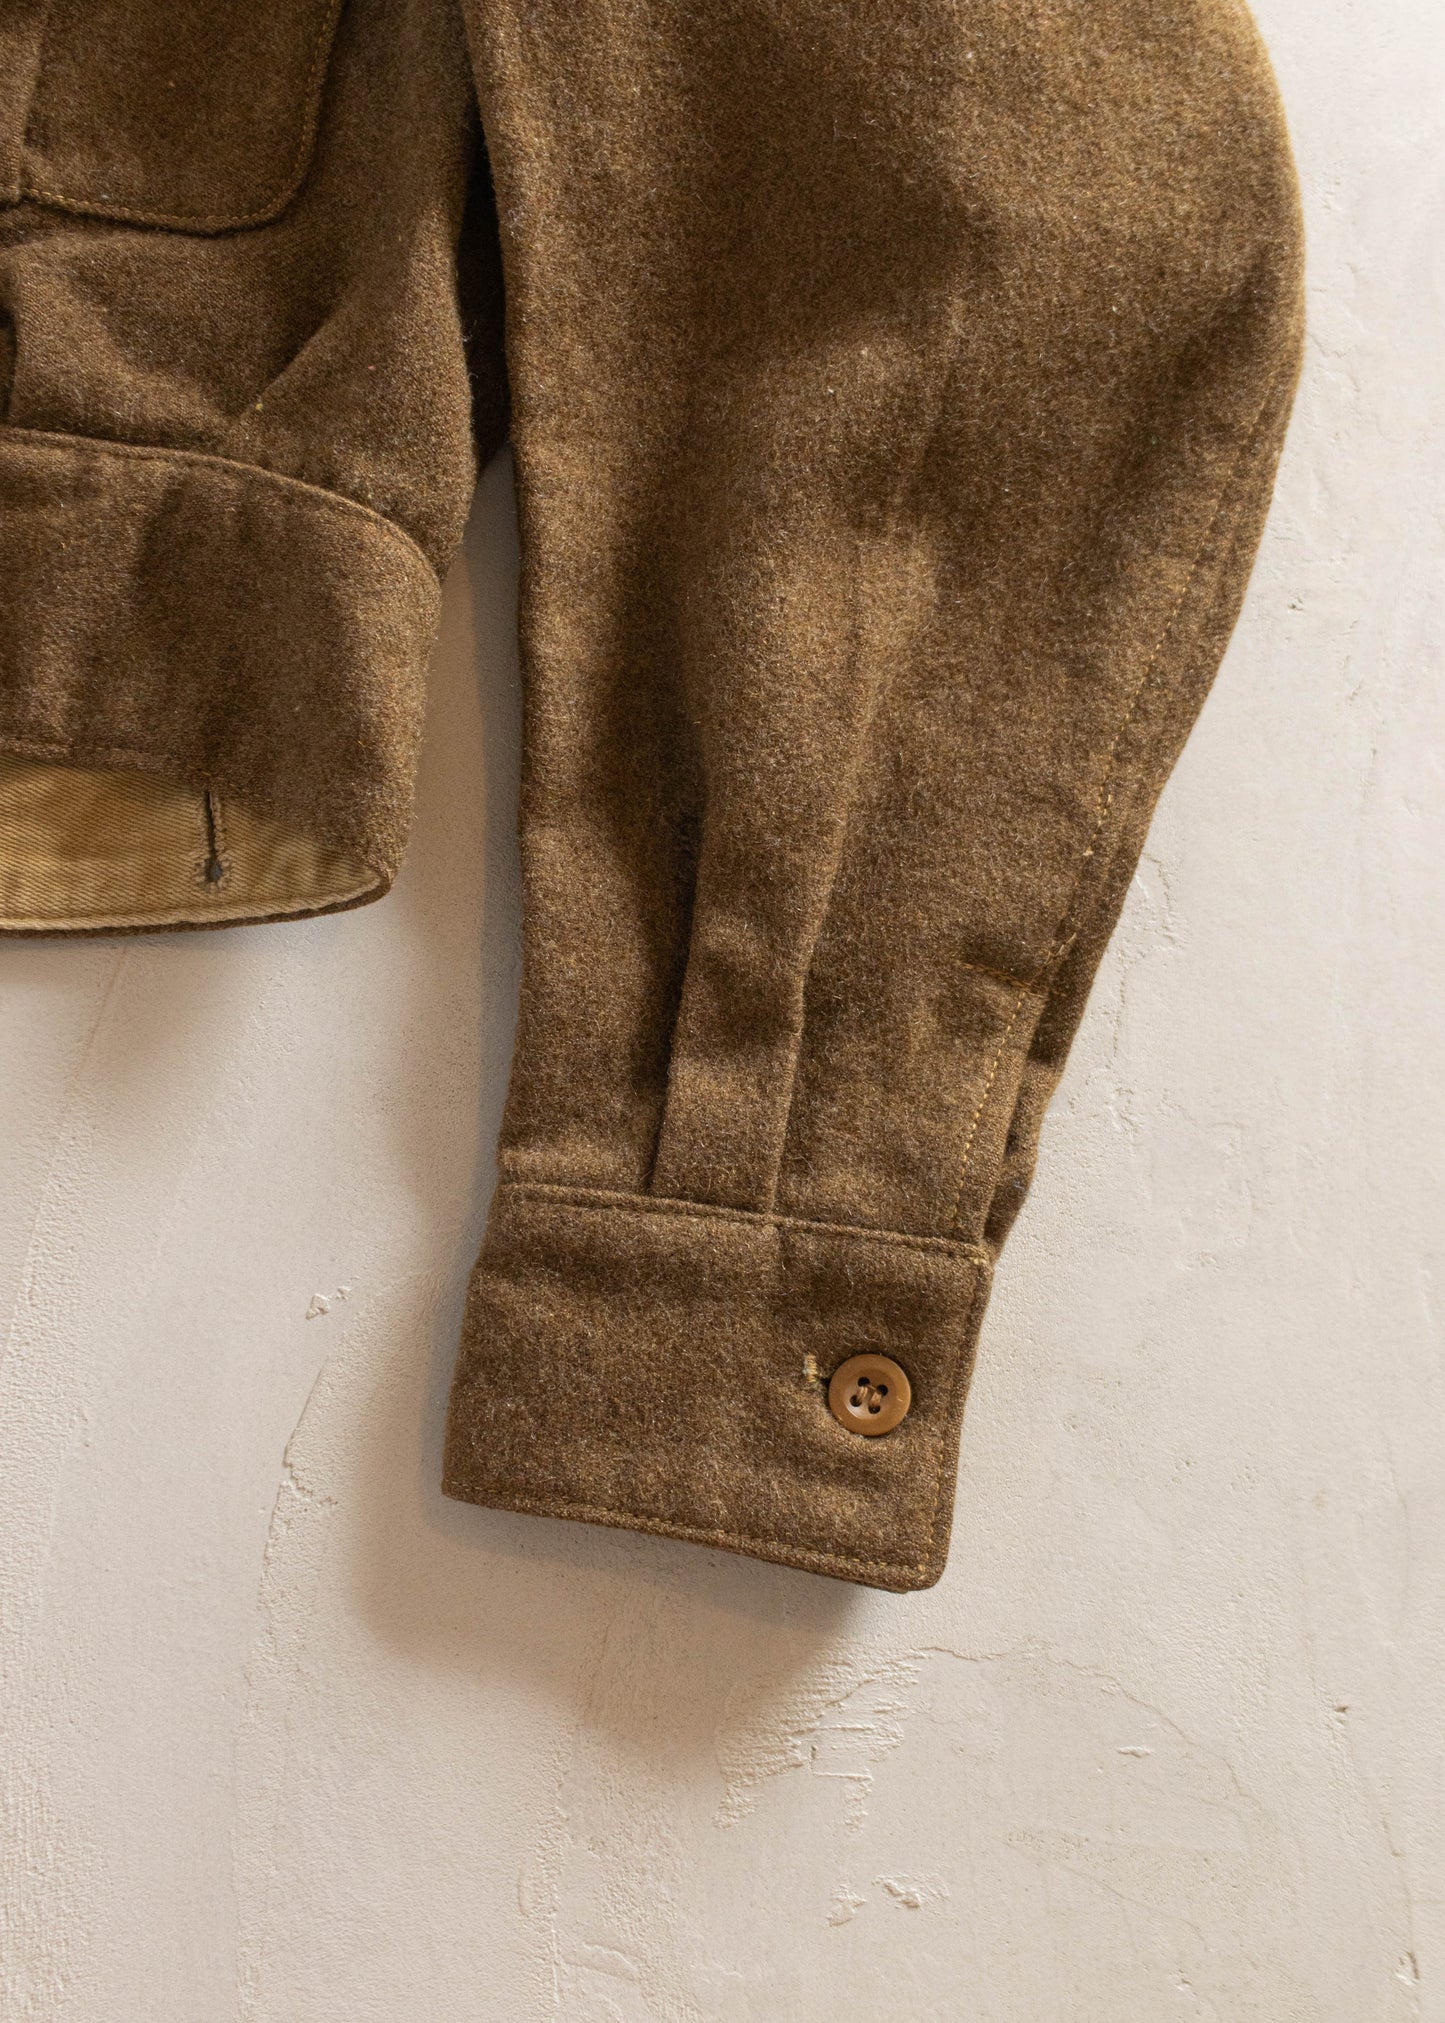 1950s British Military Wool Uniform Jacket Size XS/S